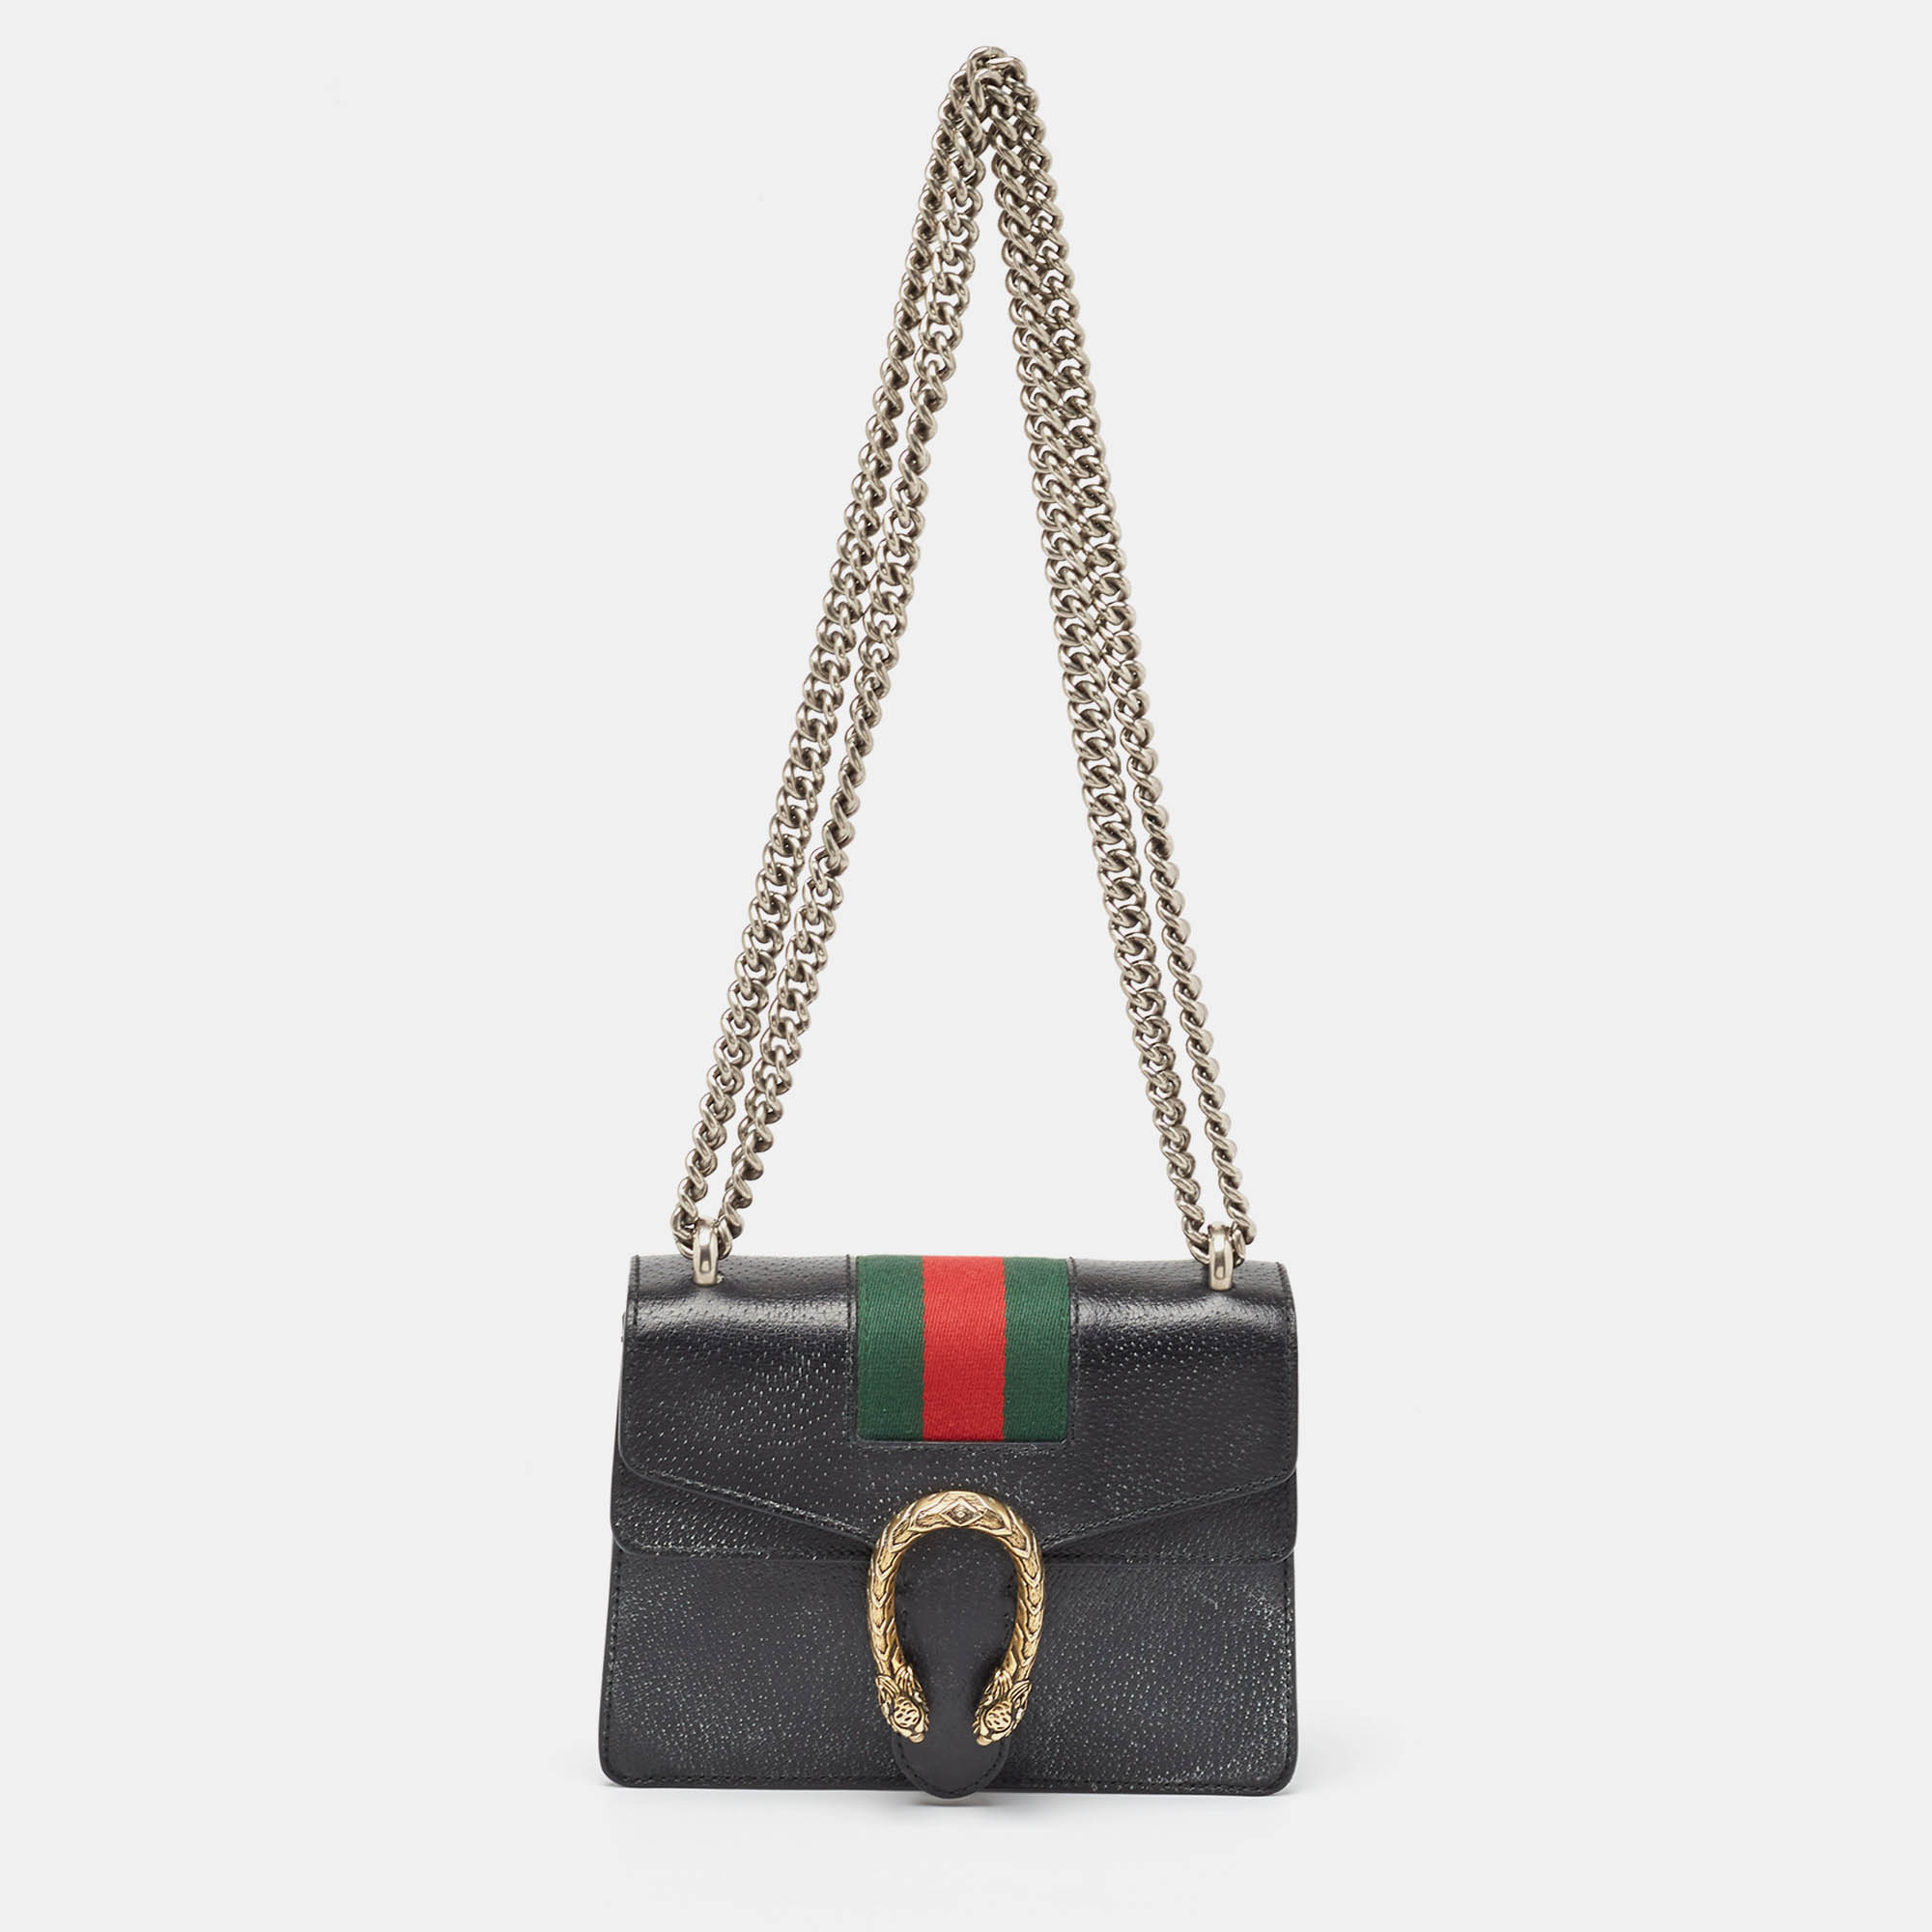 Gucci black leather mini web dionysus shoulder bag